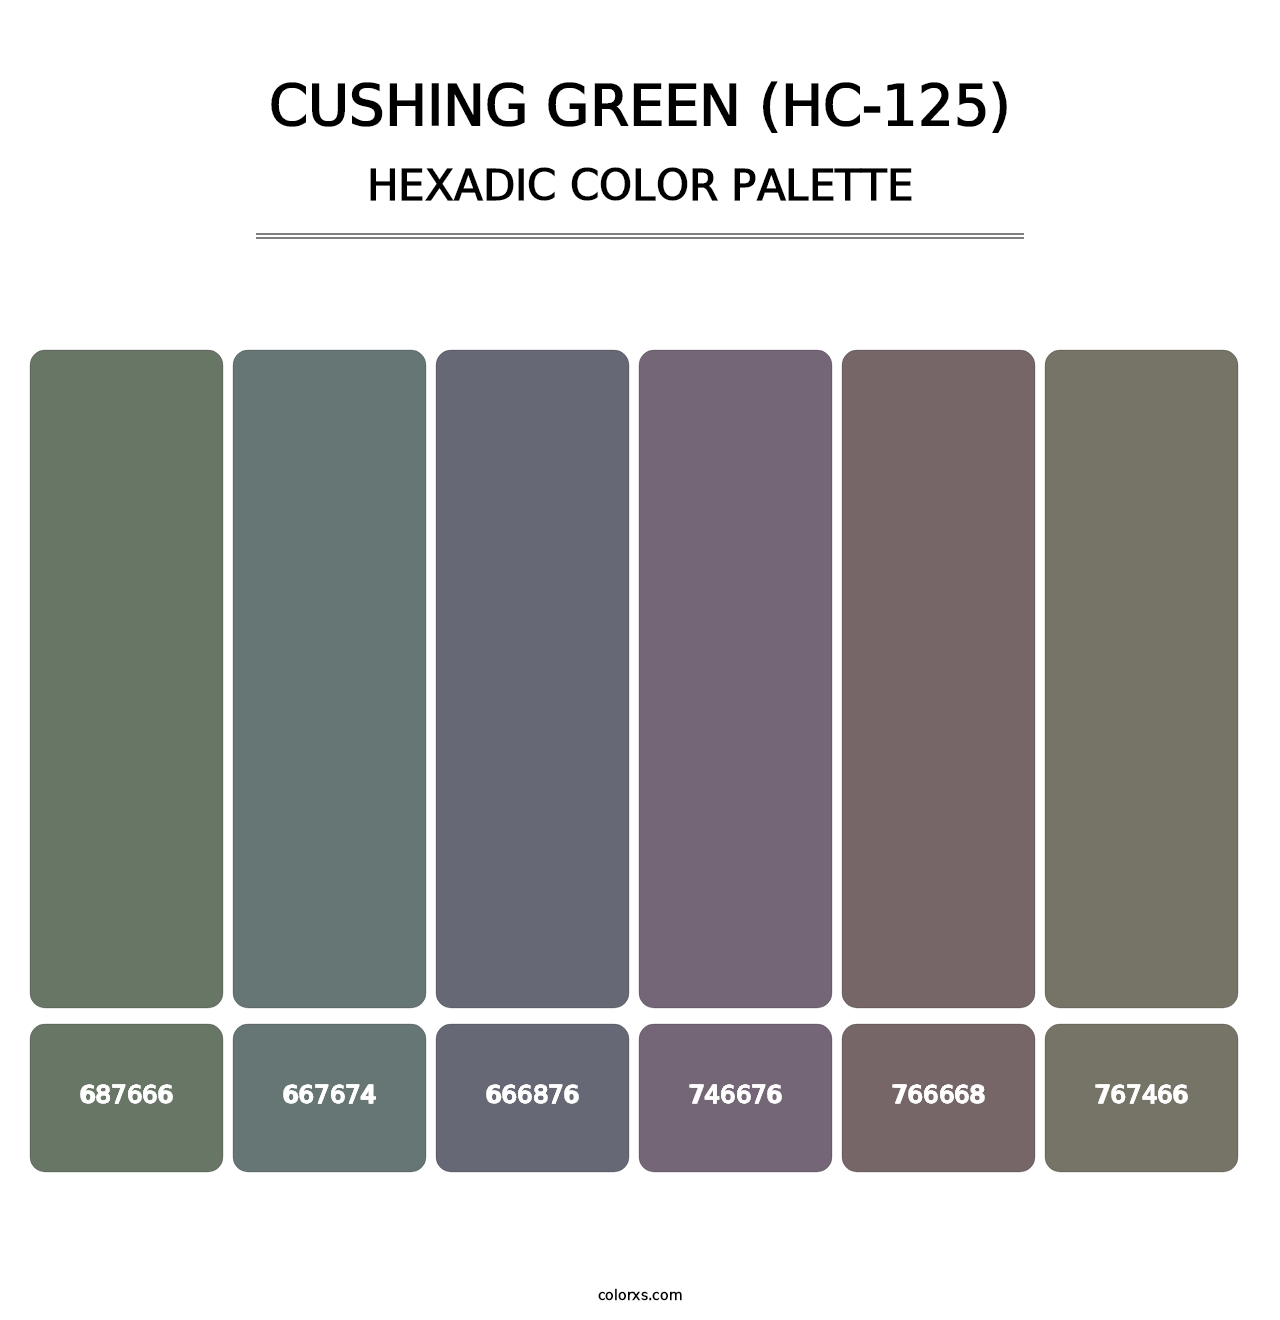 Cushing Green (HC-125) - Hexadic Color Palette